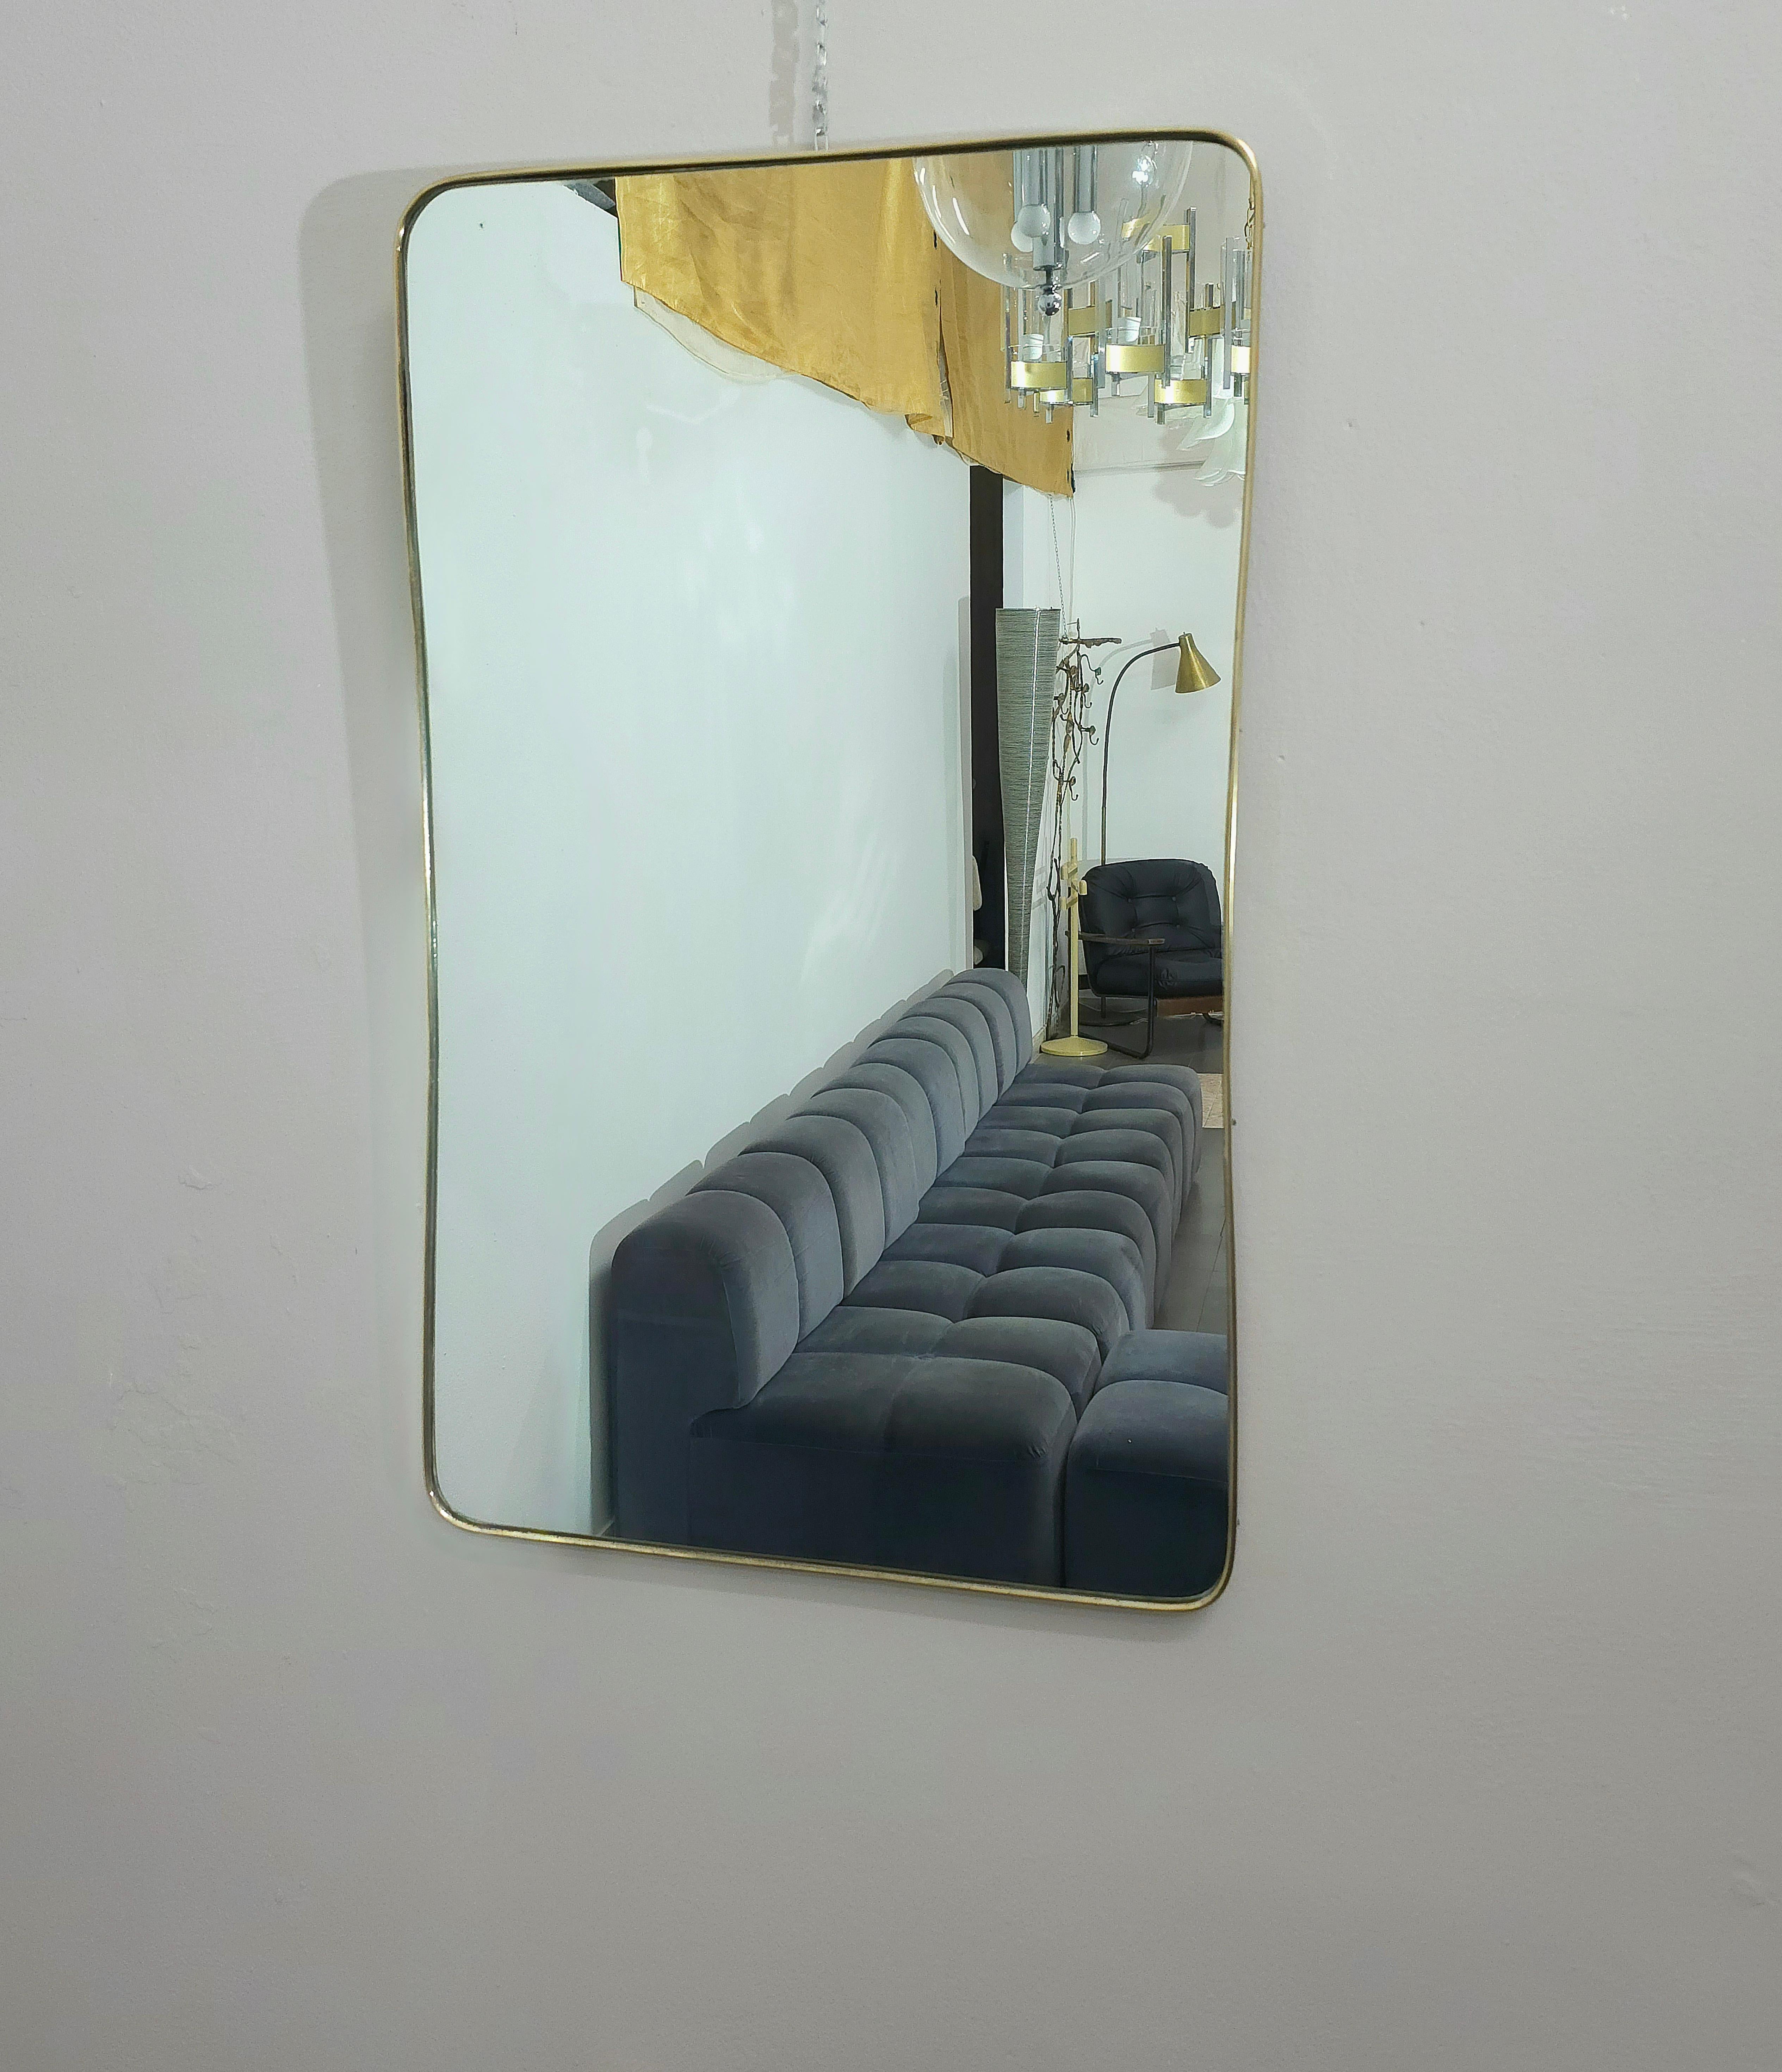 20th Century Wall Mirror Brass Attributable to Gio Ponti Midcentury Modern Italian Design 50s